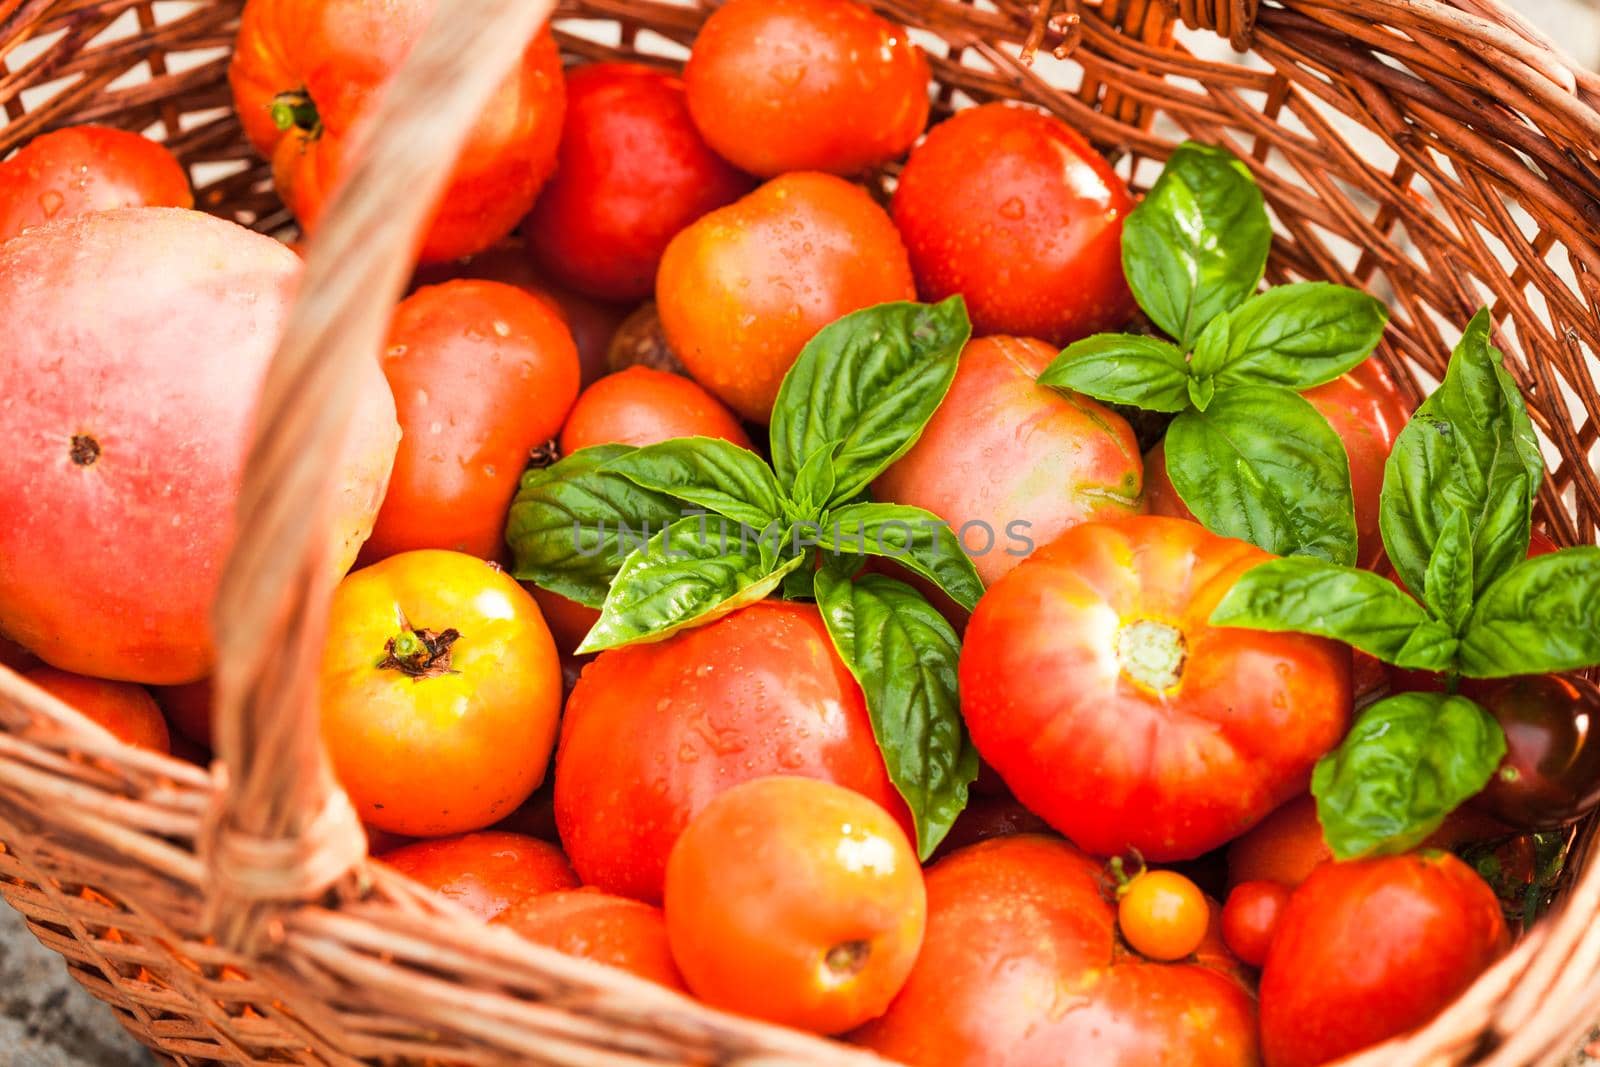 Farm tomatoes by oksix